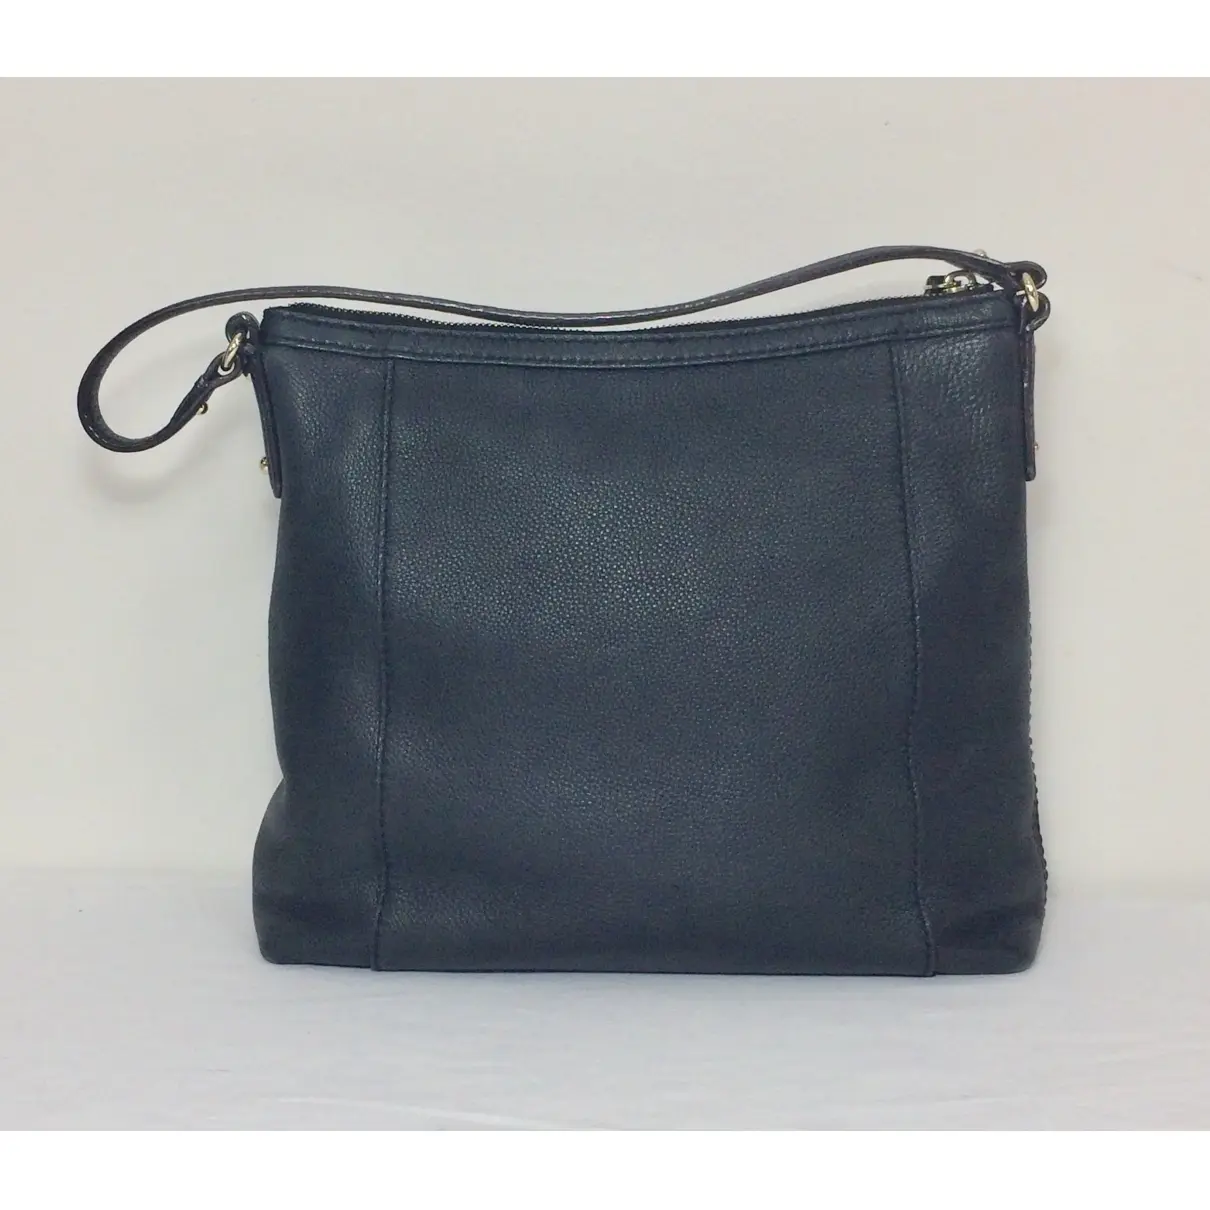 Kate Spade Leather handbag for sale